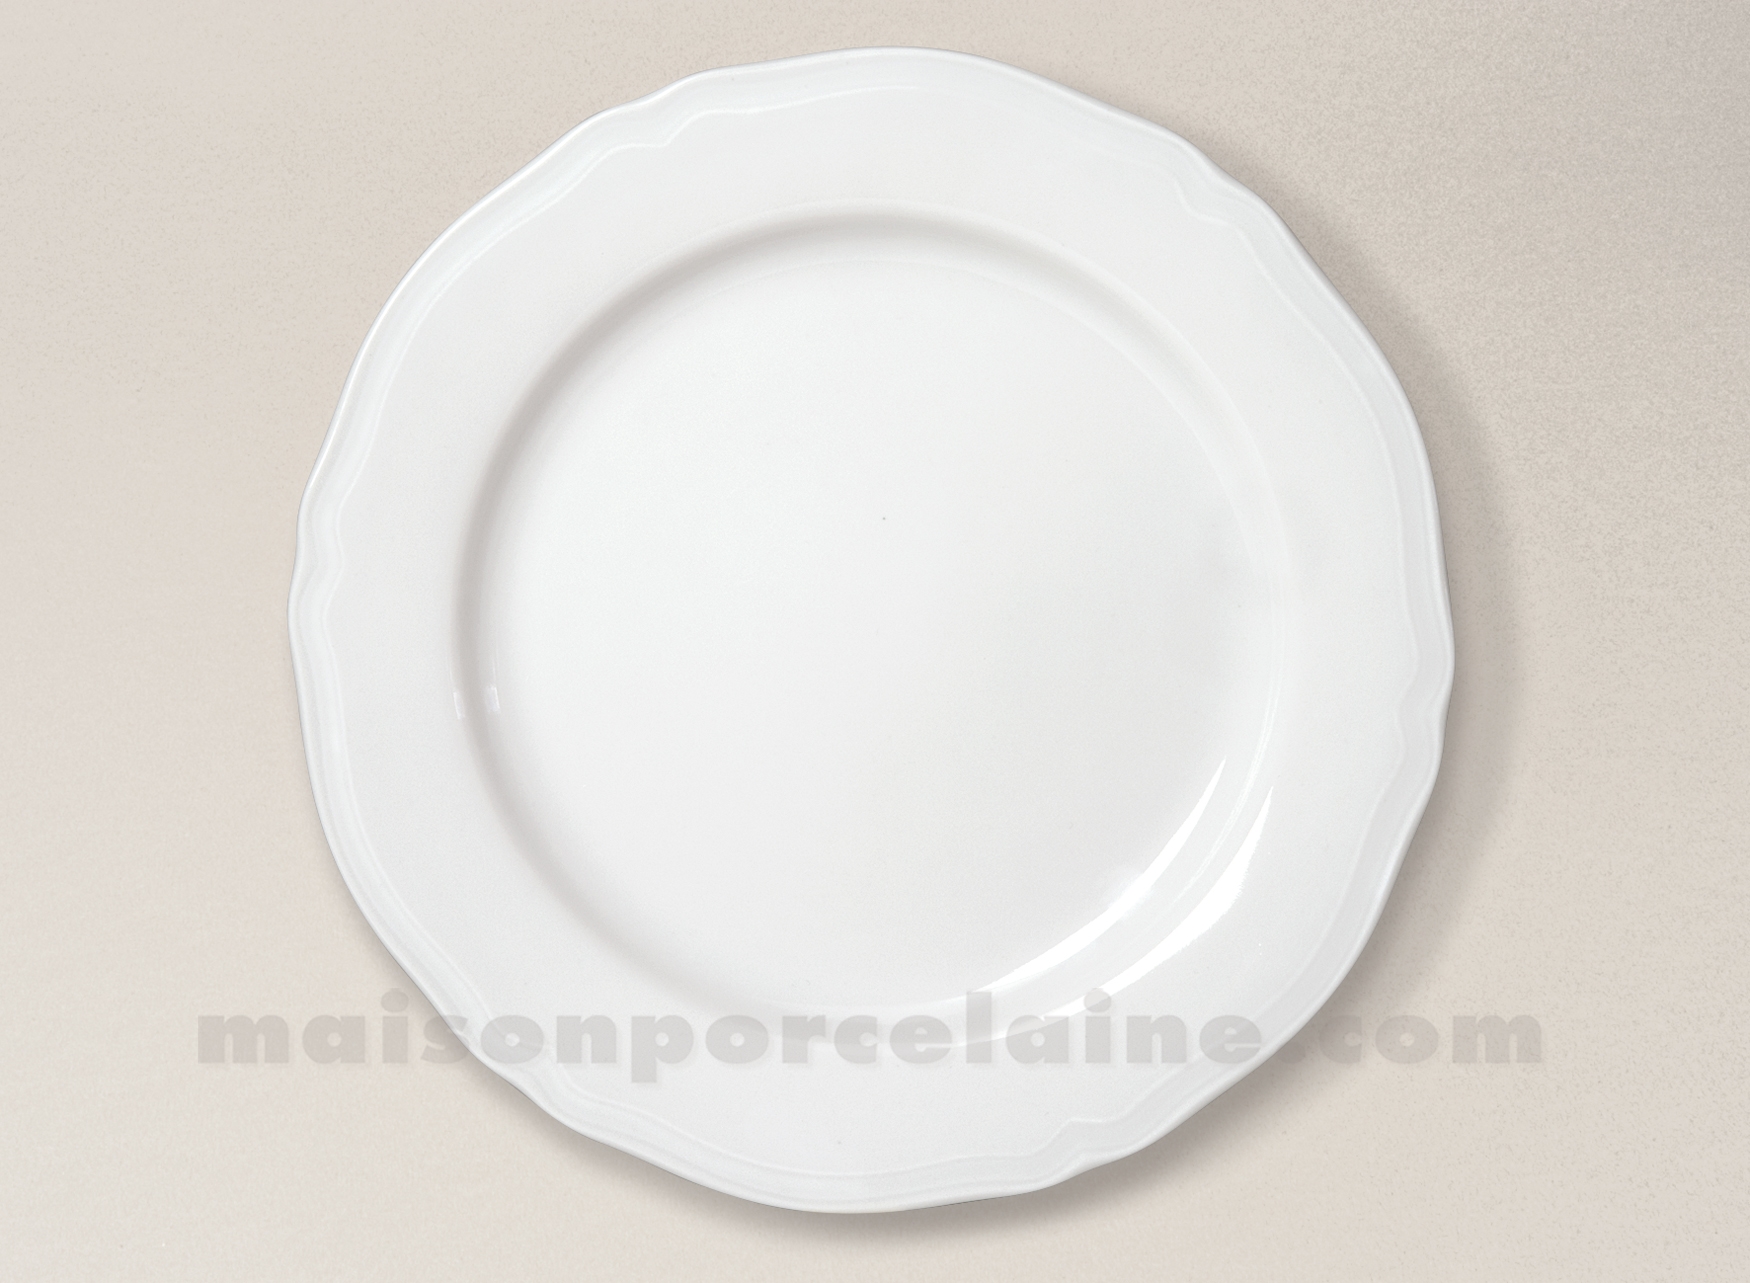 https://www.maisonporcelaine.com/b/assiette-plate-porcelaine-blanche-clara-d265__19269.jpg